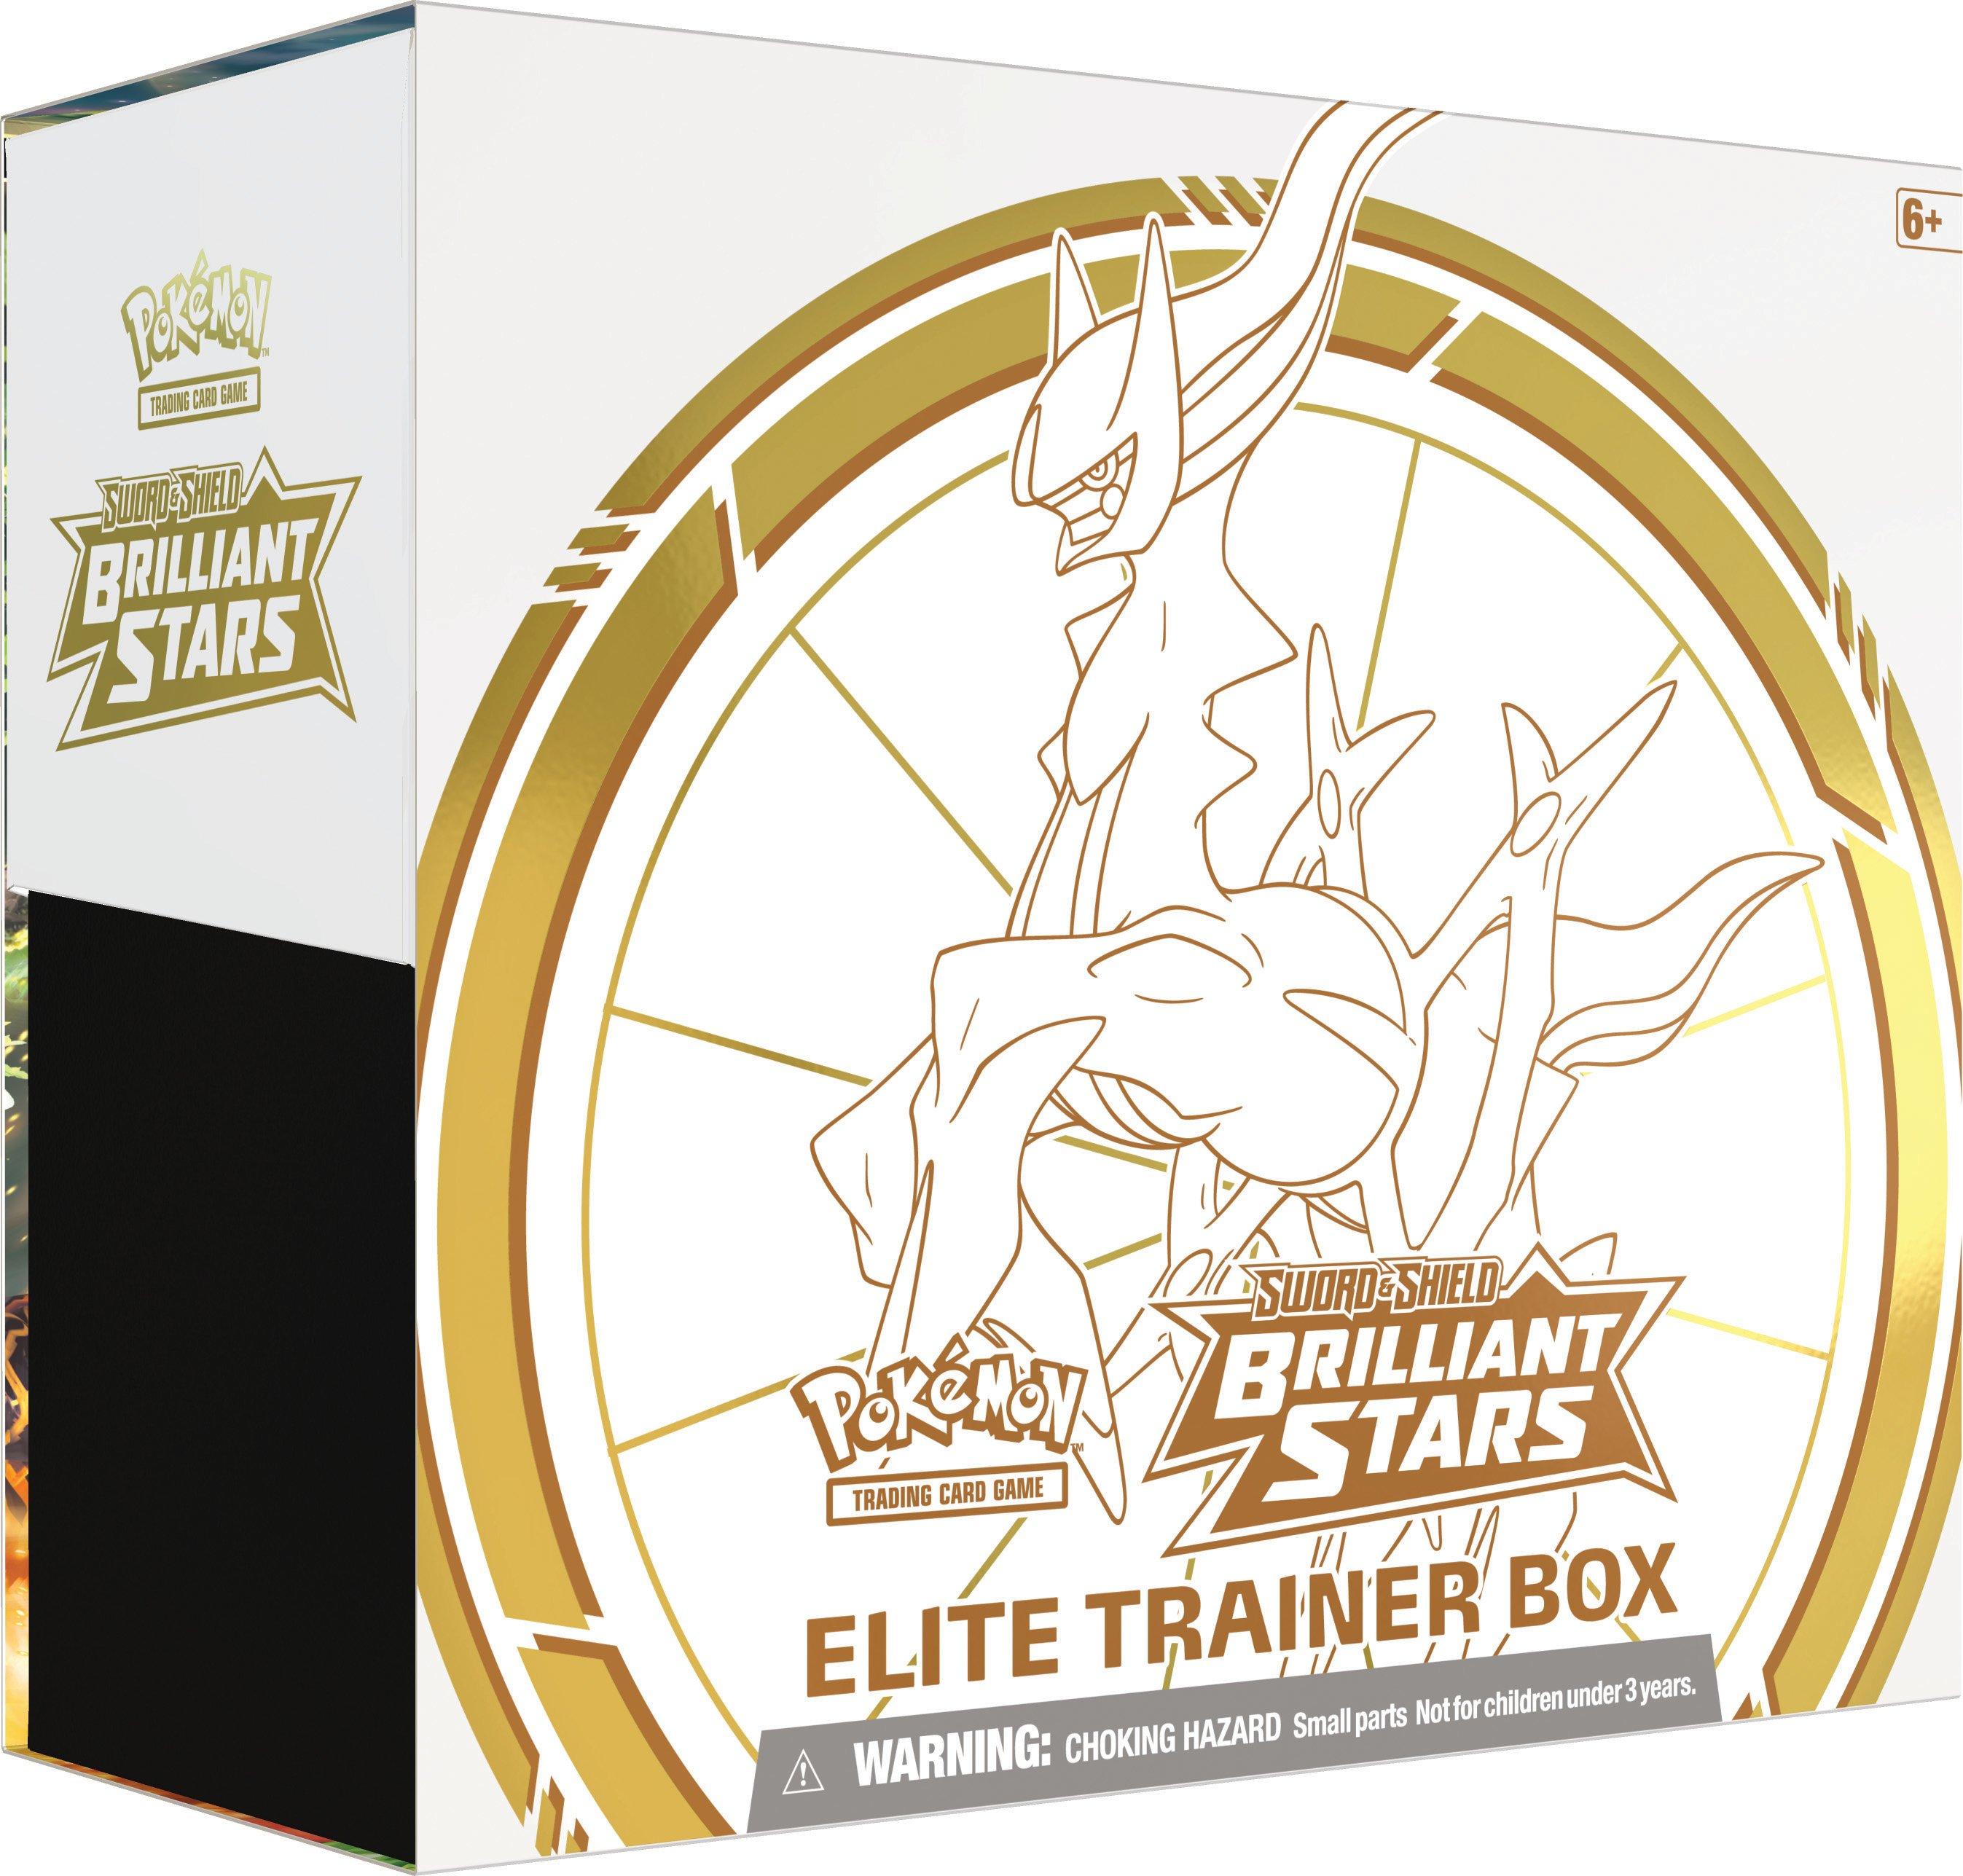 Pokémon Trading Card Games: Shaymin Vstar Premium Collection